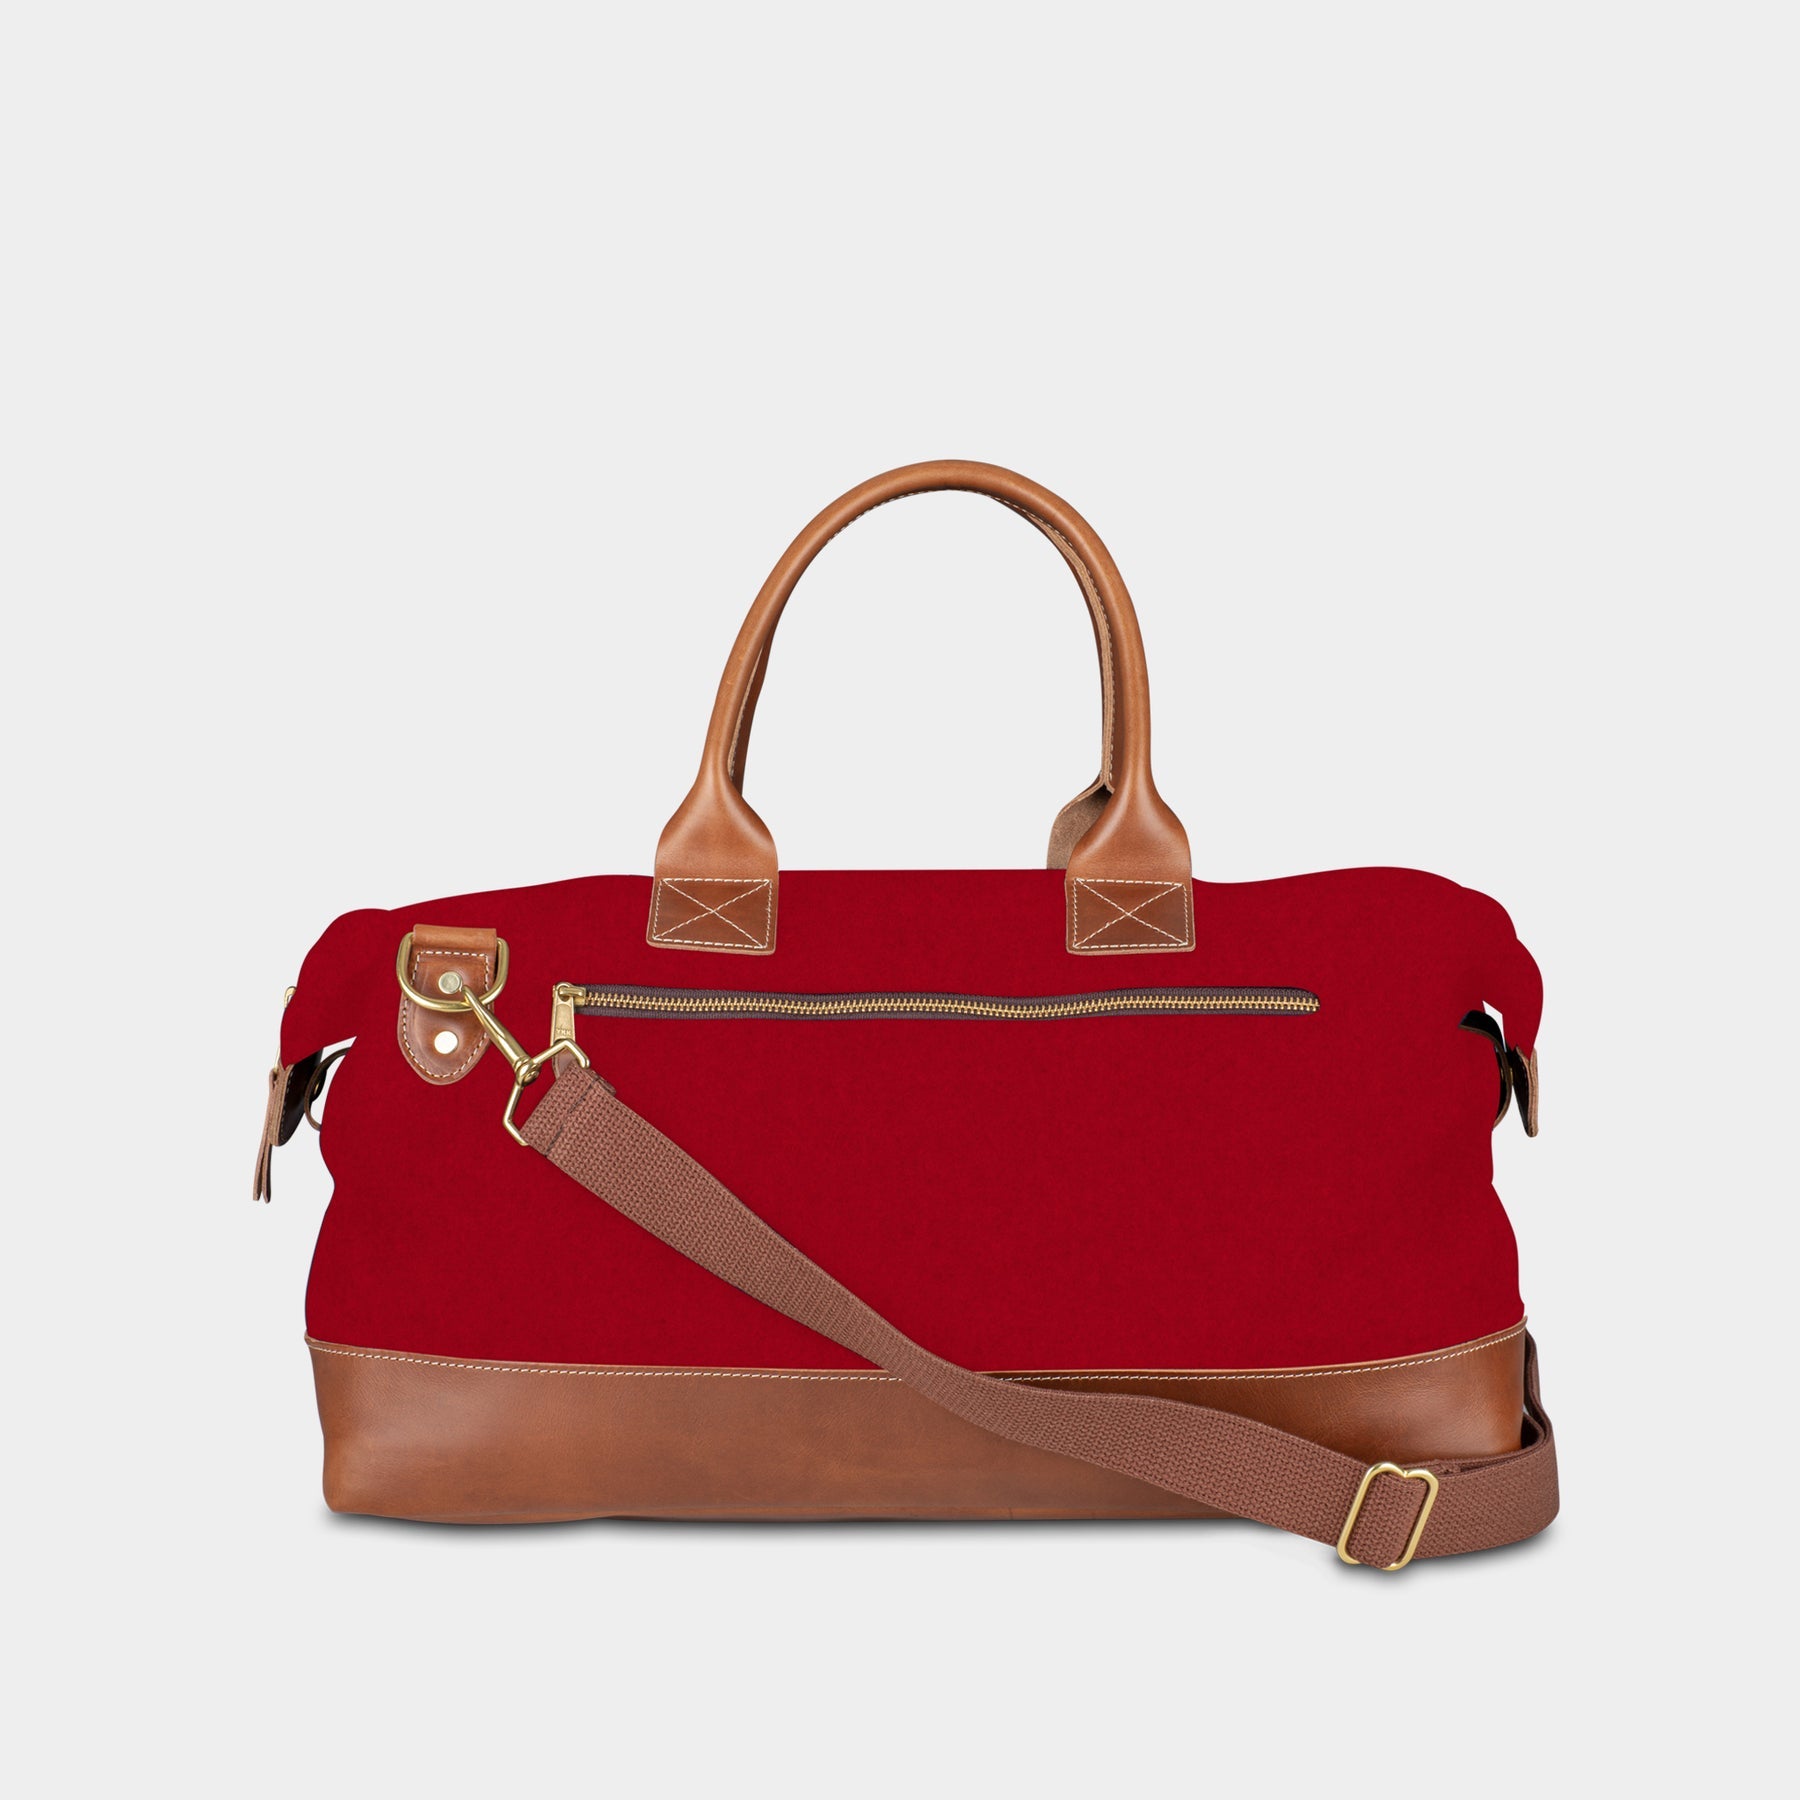 Alabama "A" Weekender Duffle Bag in Crimson